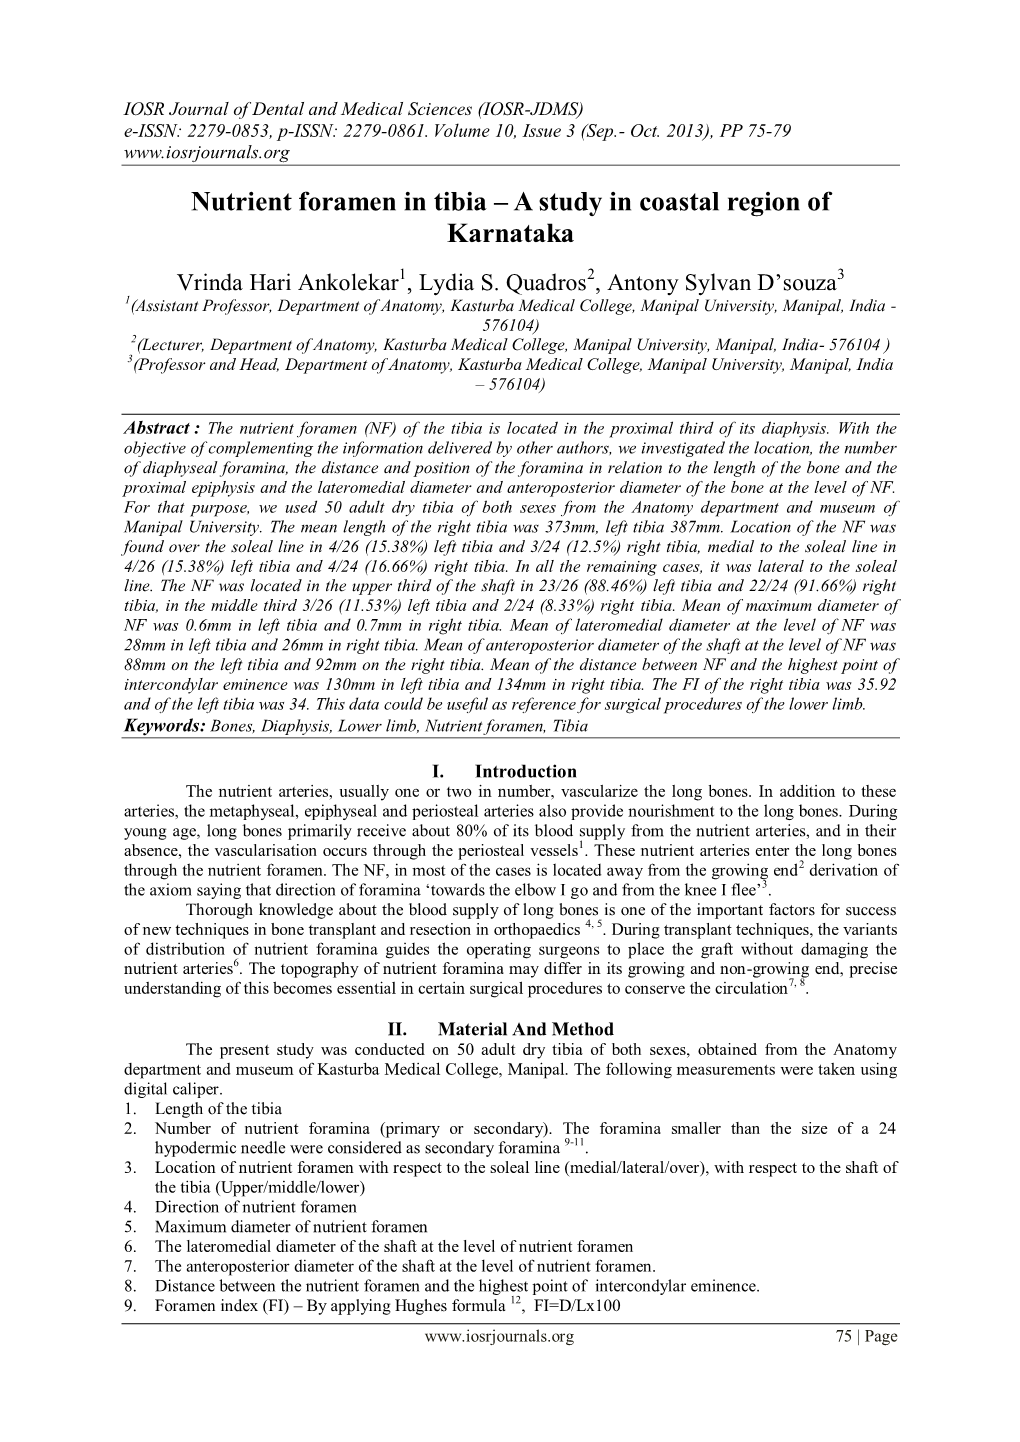 Nutrient Foramen in Tibia – a Study in Coastal Region of Karnataka